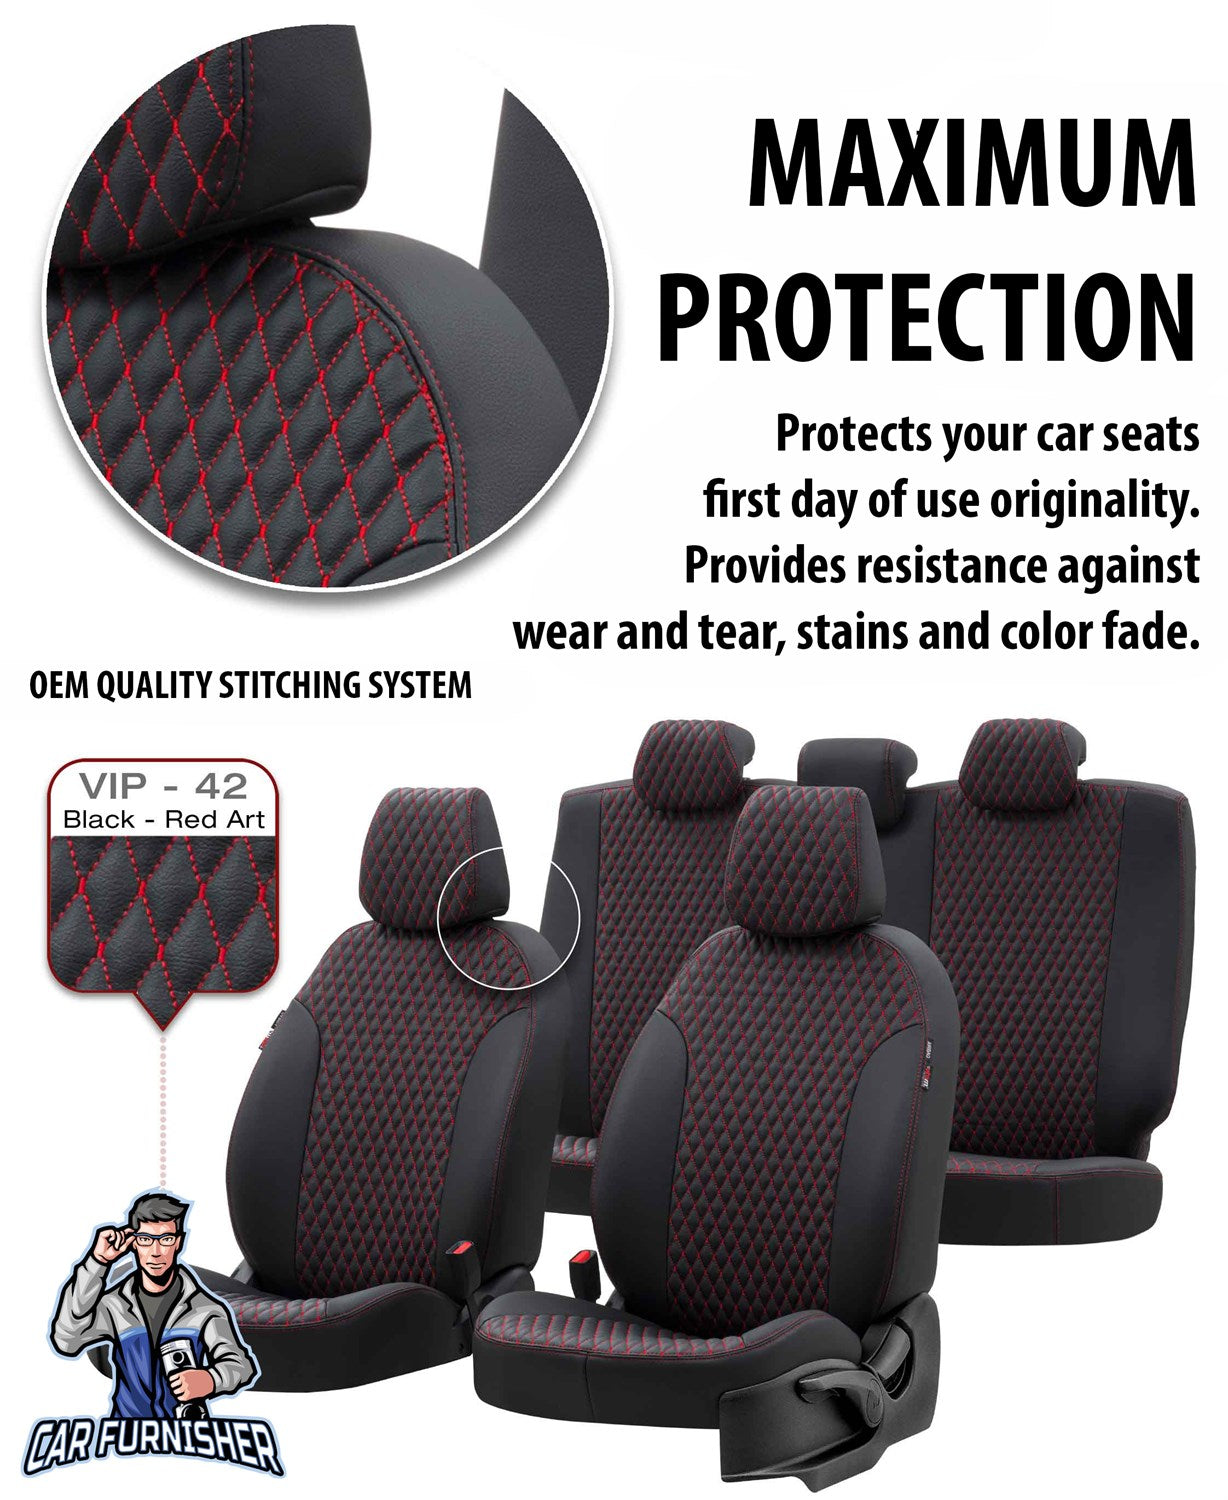 Daewoo Tacuma Seat Covers Amsterdam Leather Design Smoked Black Leather